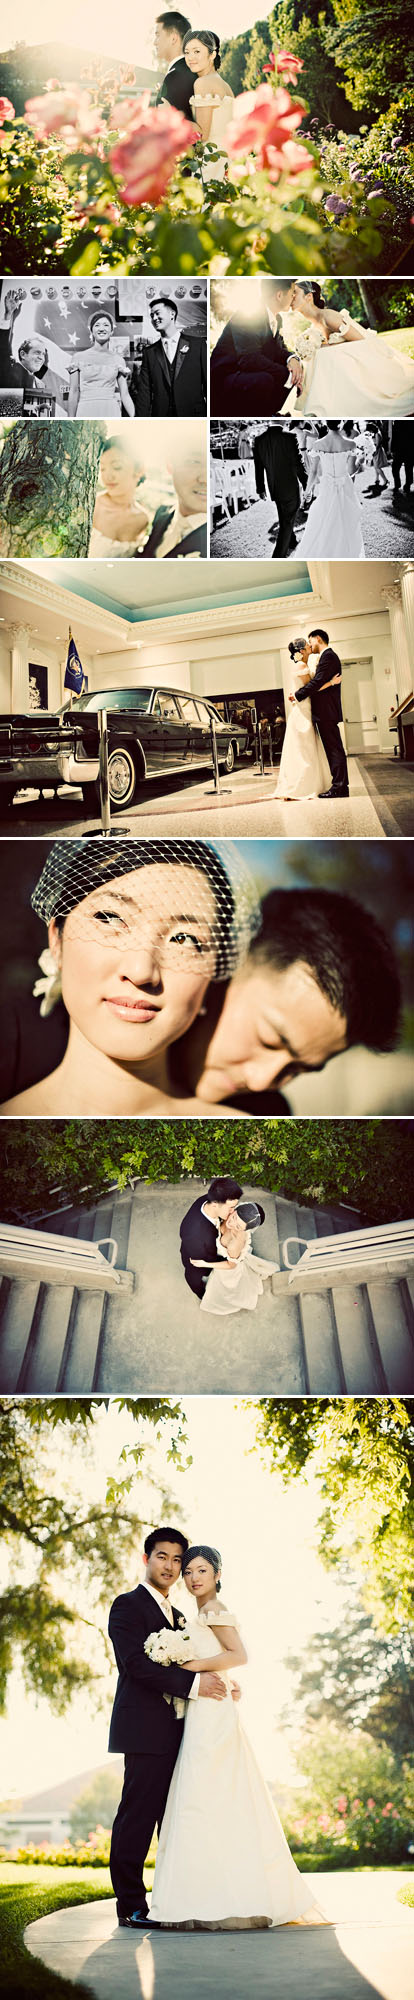 Images by Amelia Lyon Photography, creative wedding portraits